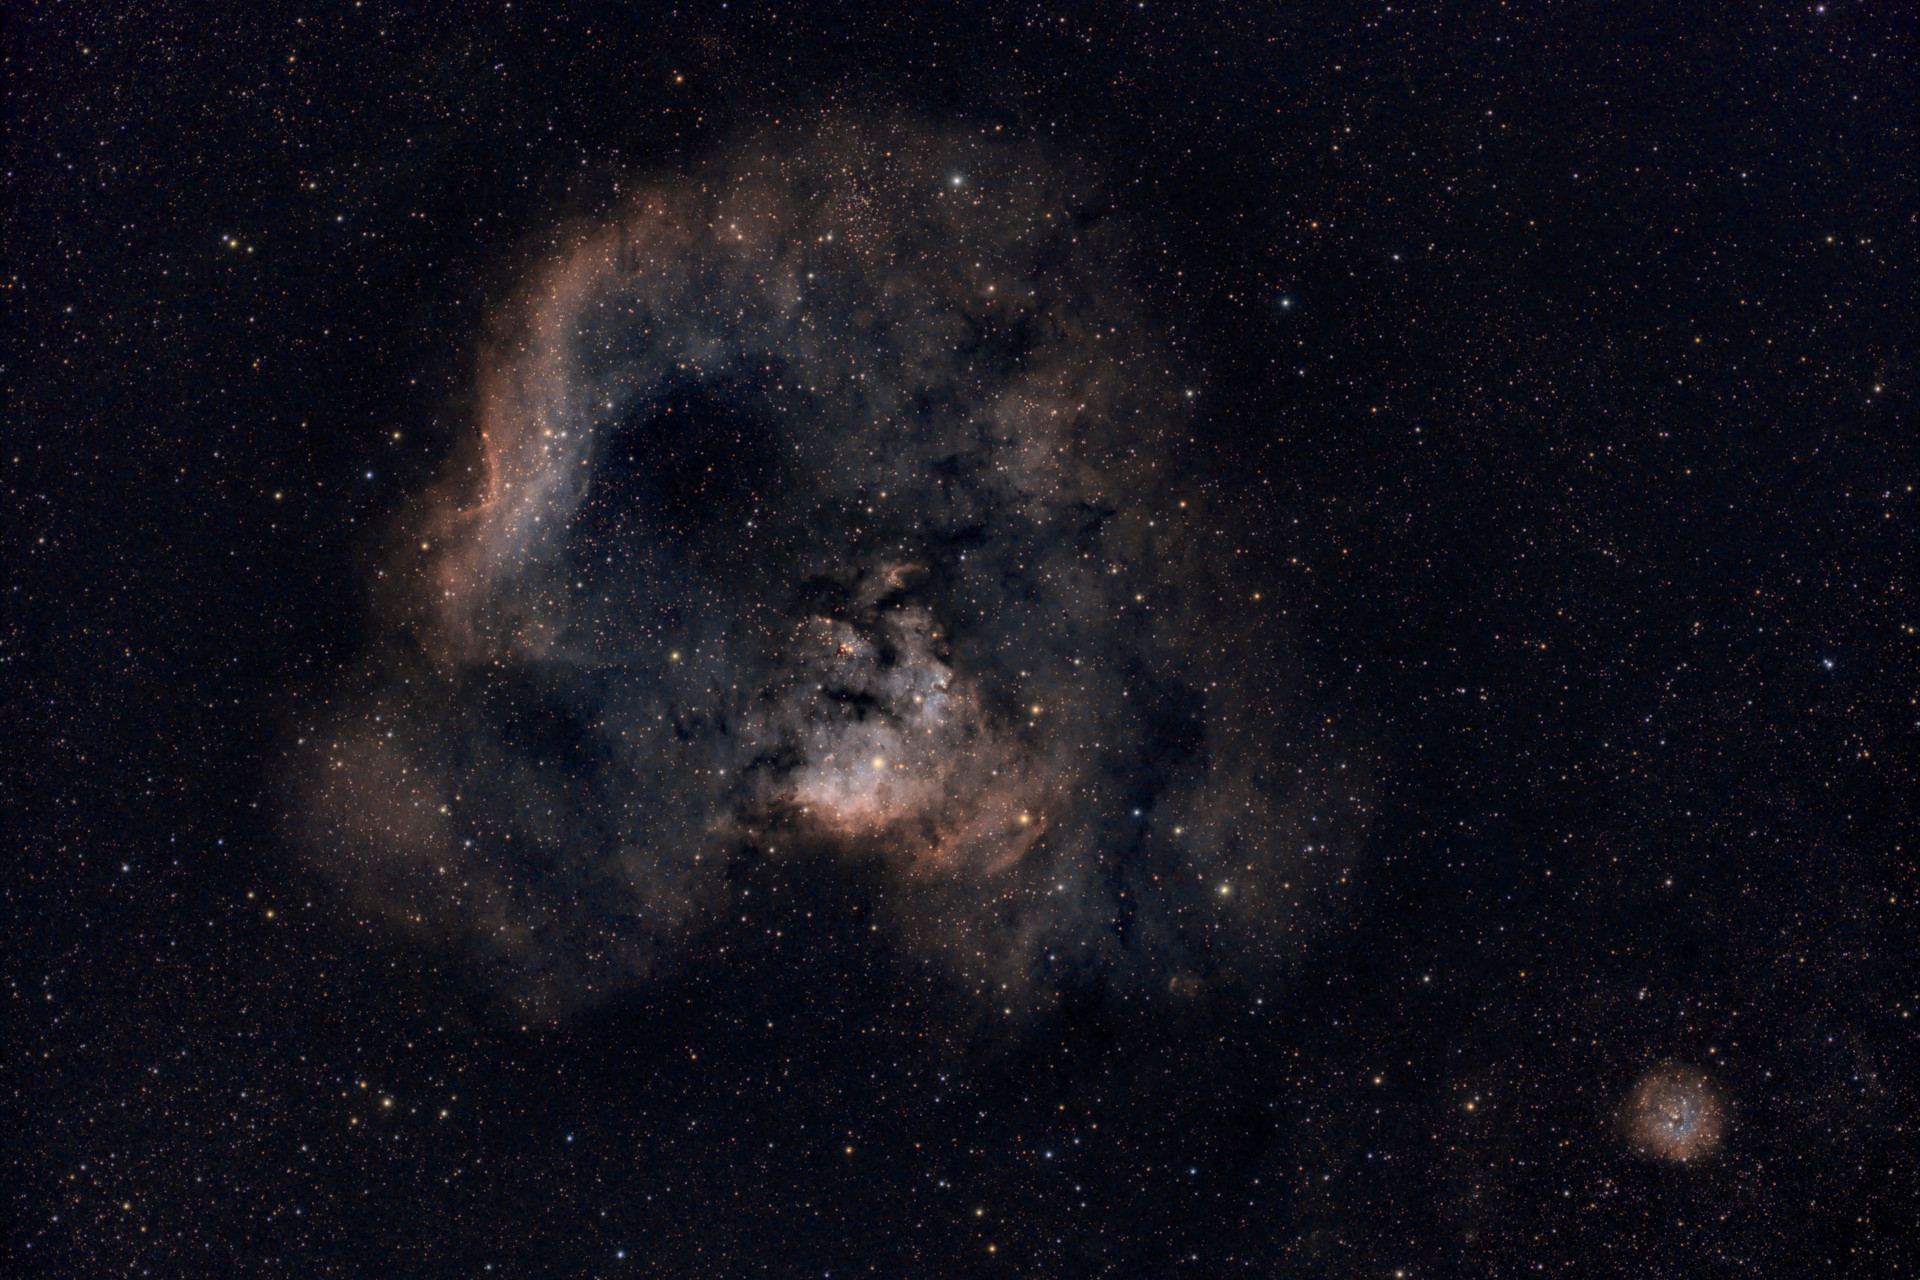 NGC 7822 - The Question Mark Nebula